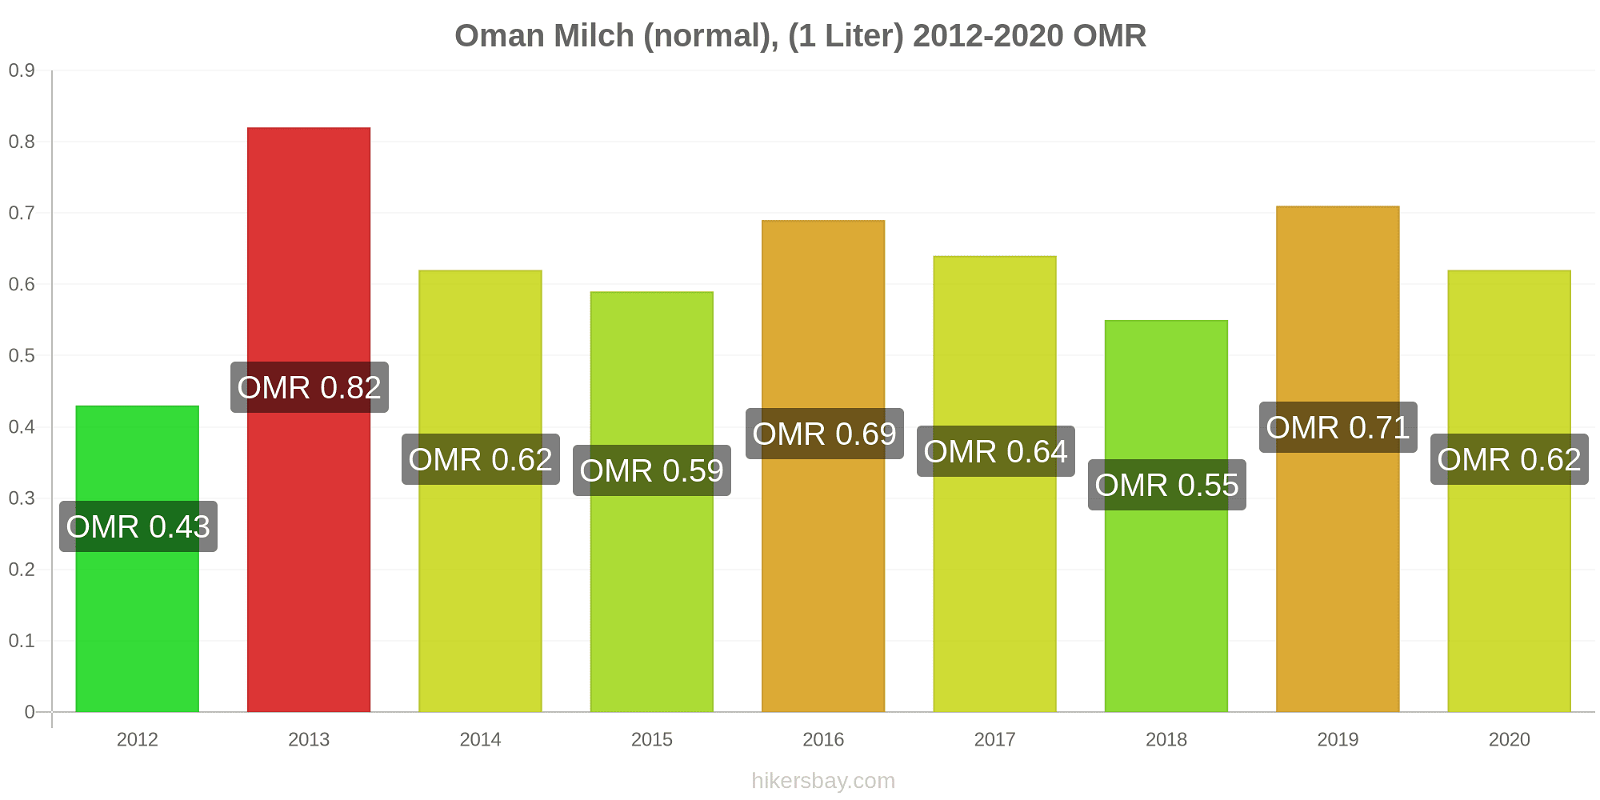 Oman Preisänderungen (Regulär), Milch (1 Liter) hikersbay.com